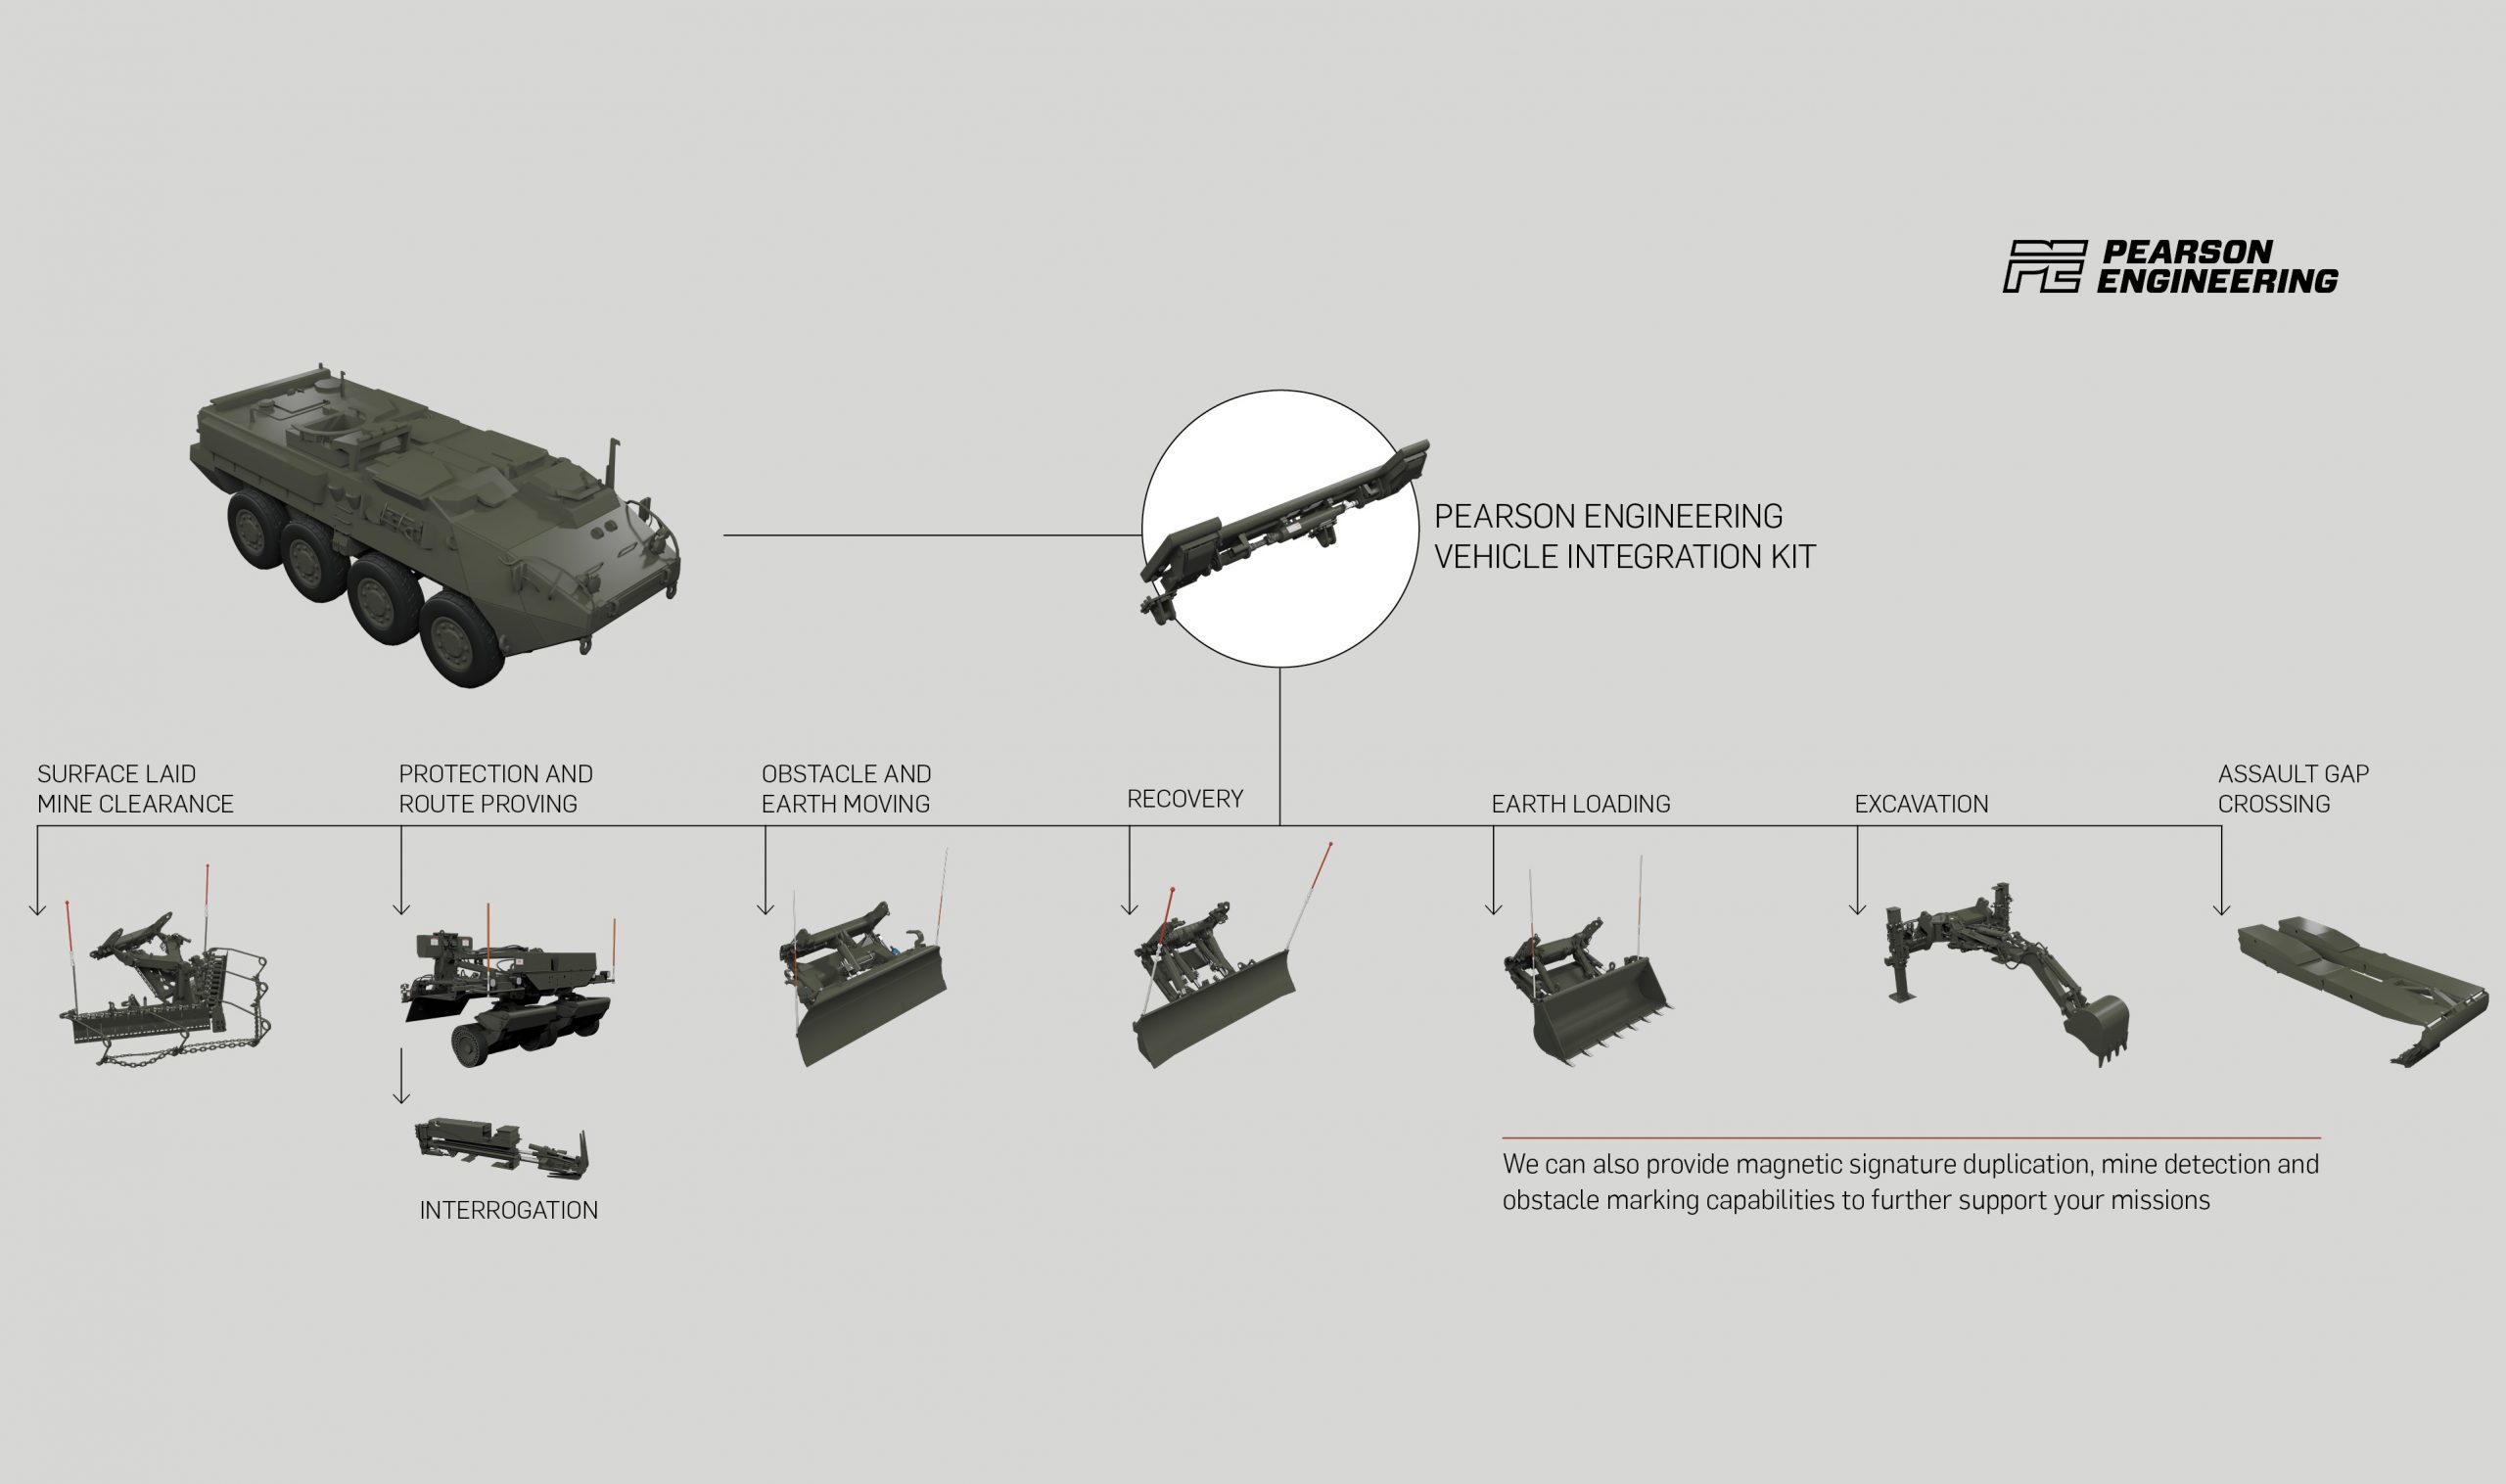 Pearson Engineering Set to Integrate Engineering Kits for Brazilian Army Guarani 6x6